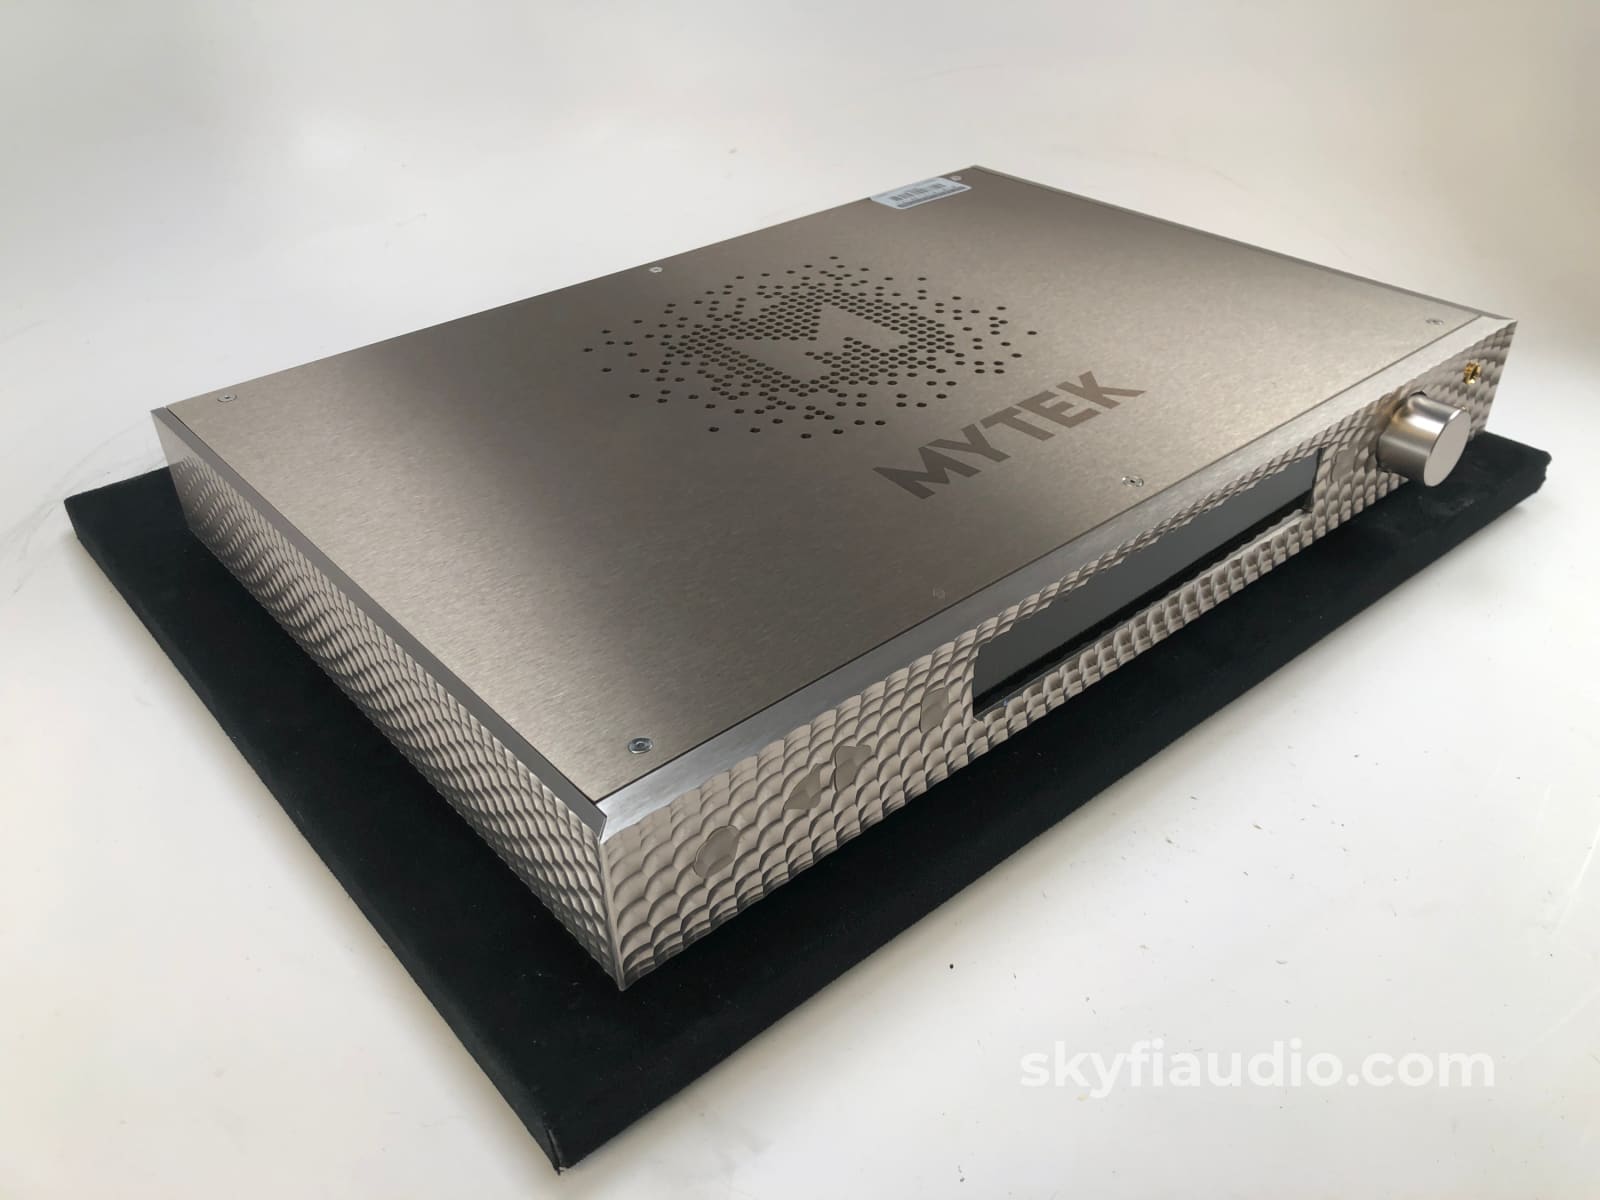 Mytek Manhattan Dac Ii With Streamer Network Card - Easiest Path To Tidal Master Audio Quality Cd +